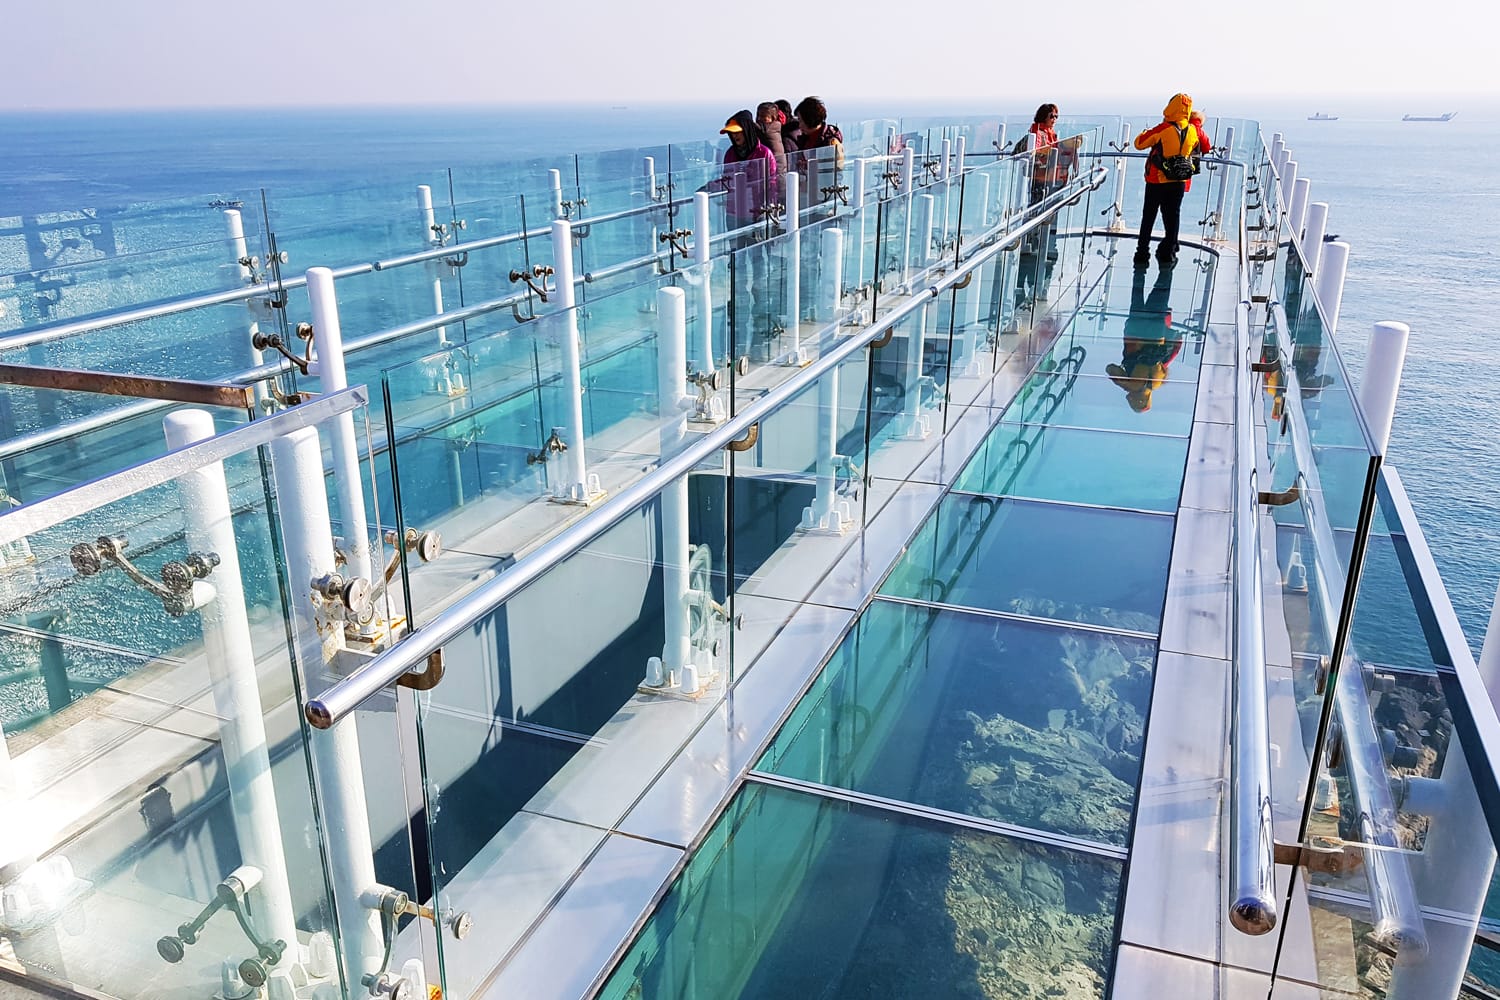 Many tourists standing at Oryukdo Skywalk, the glass bridge seascape viewer, one of famous landmark on the peak of rock mountain in Oryukdo City, South Korea